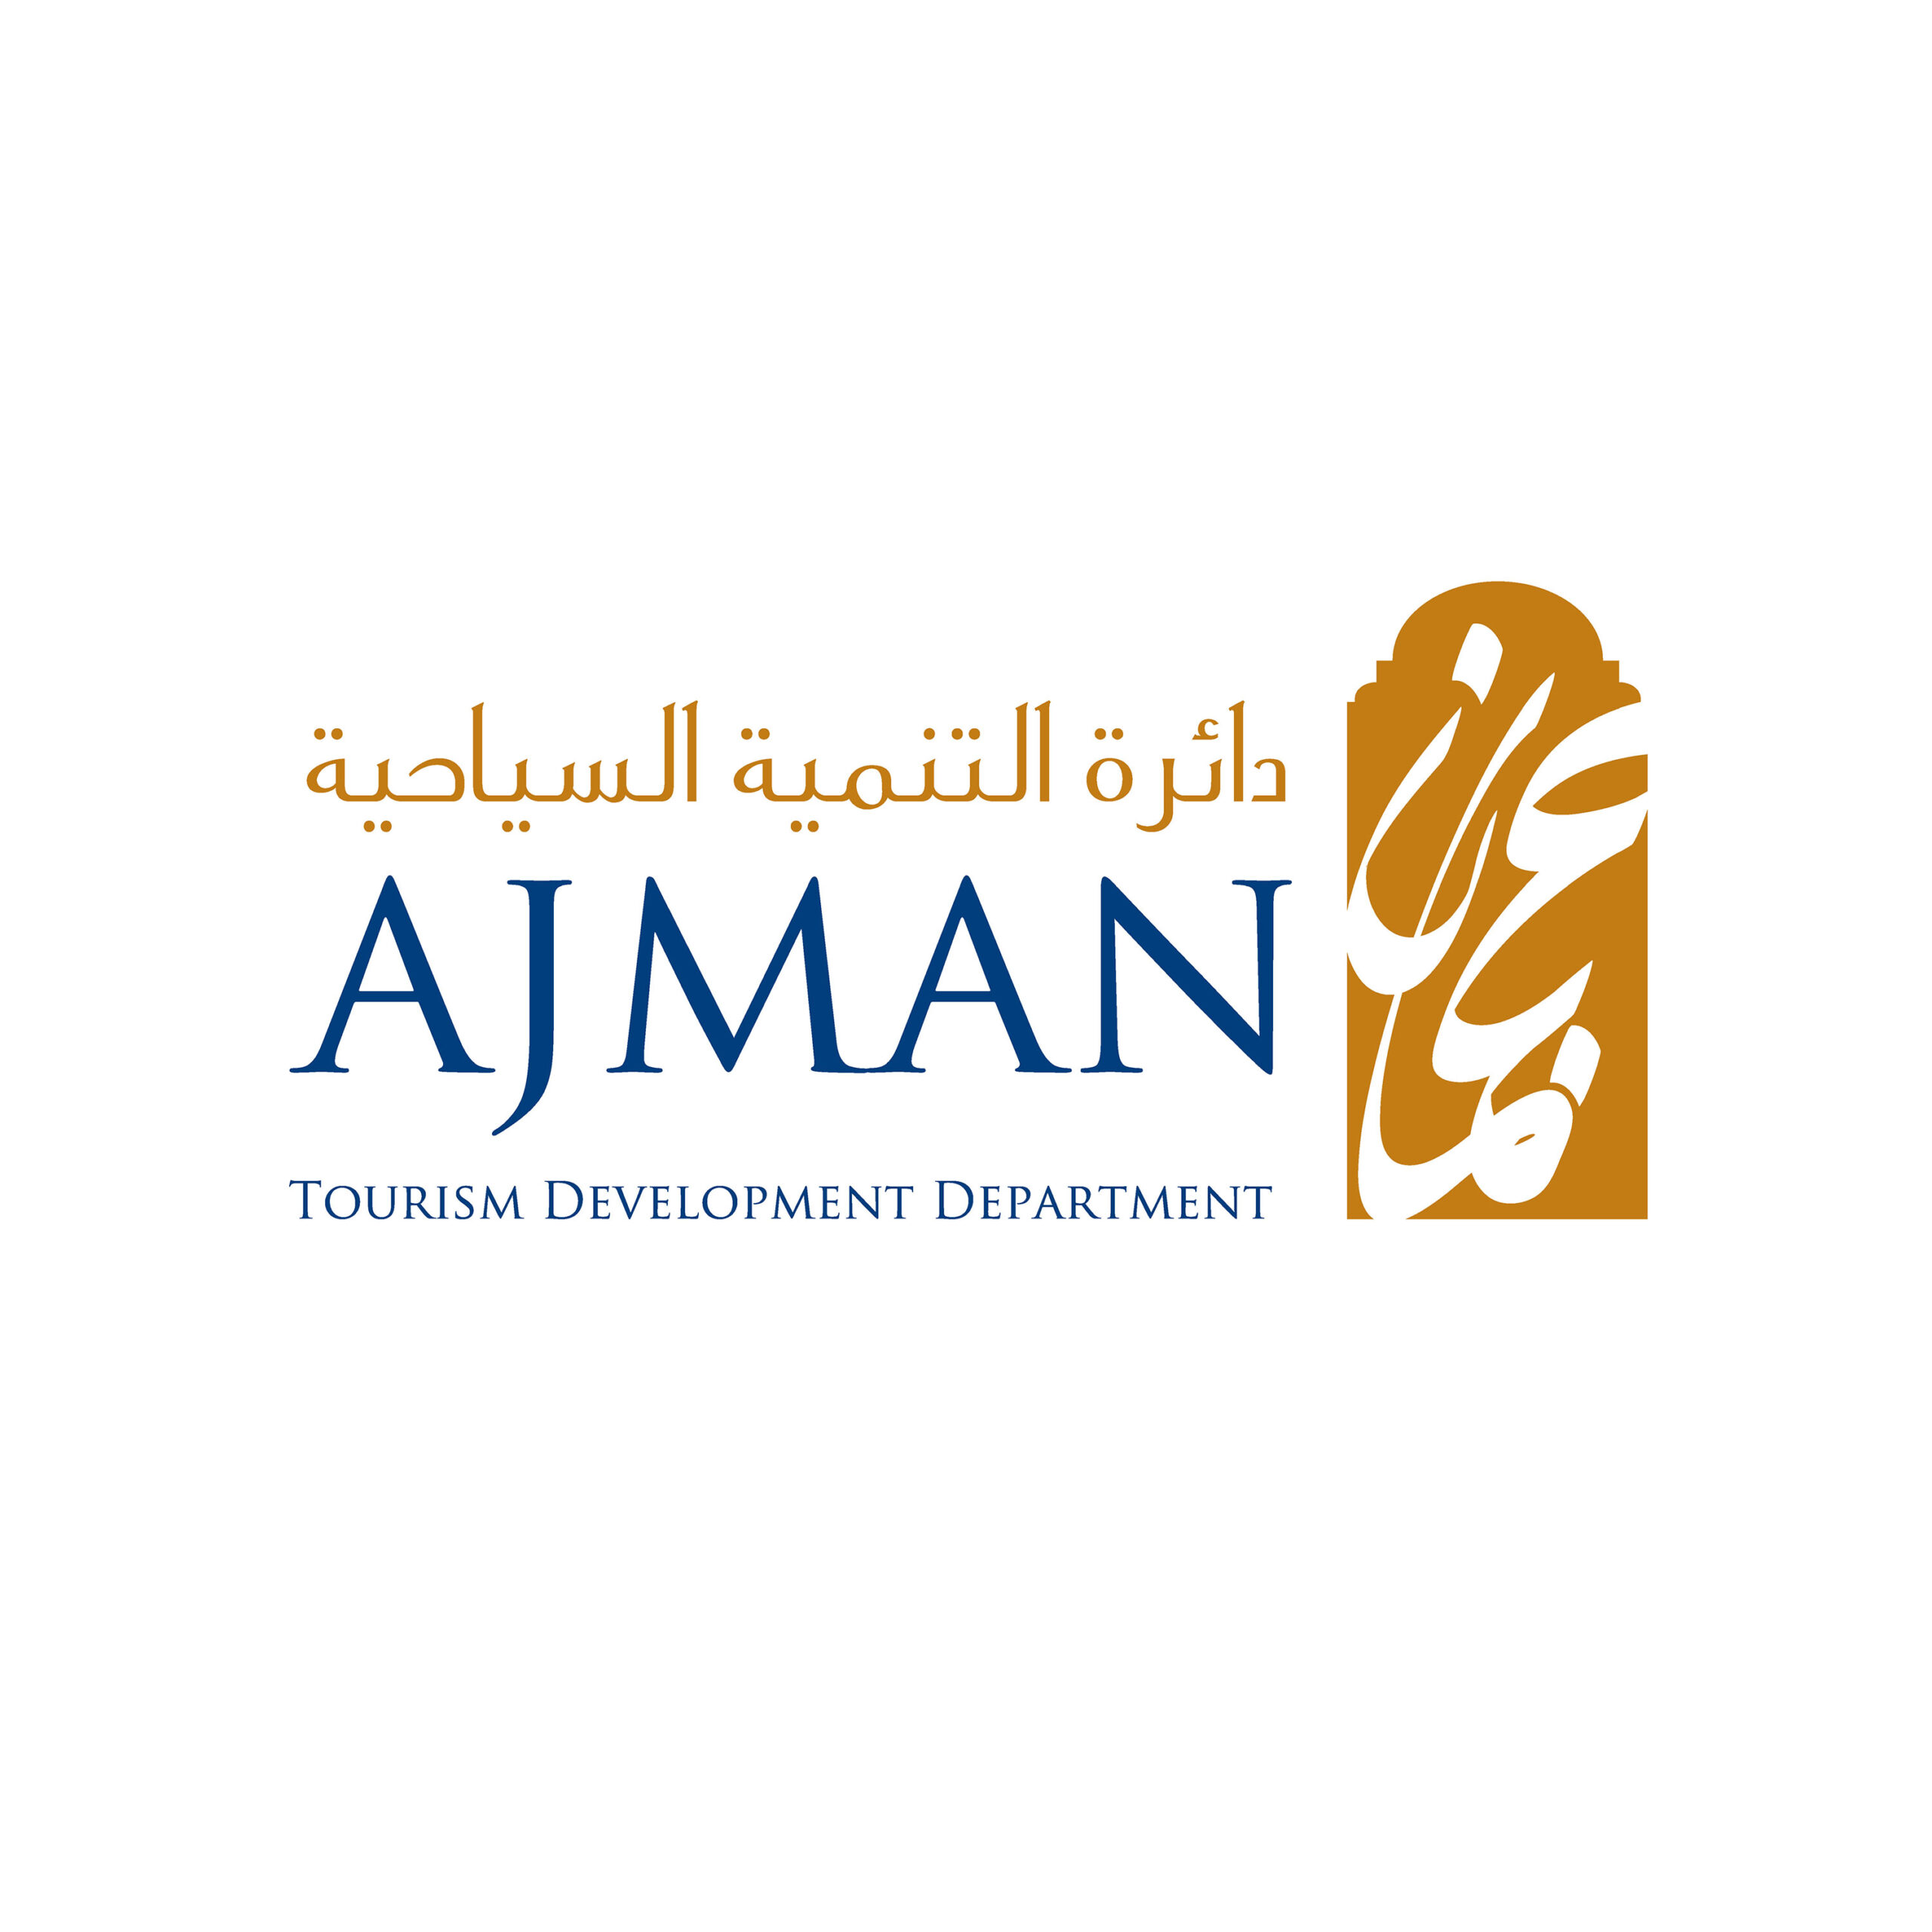 ajman tourism development department photos